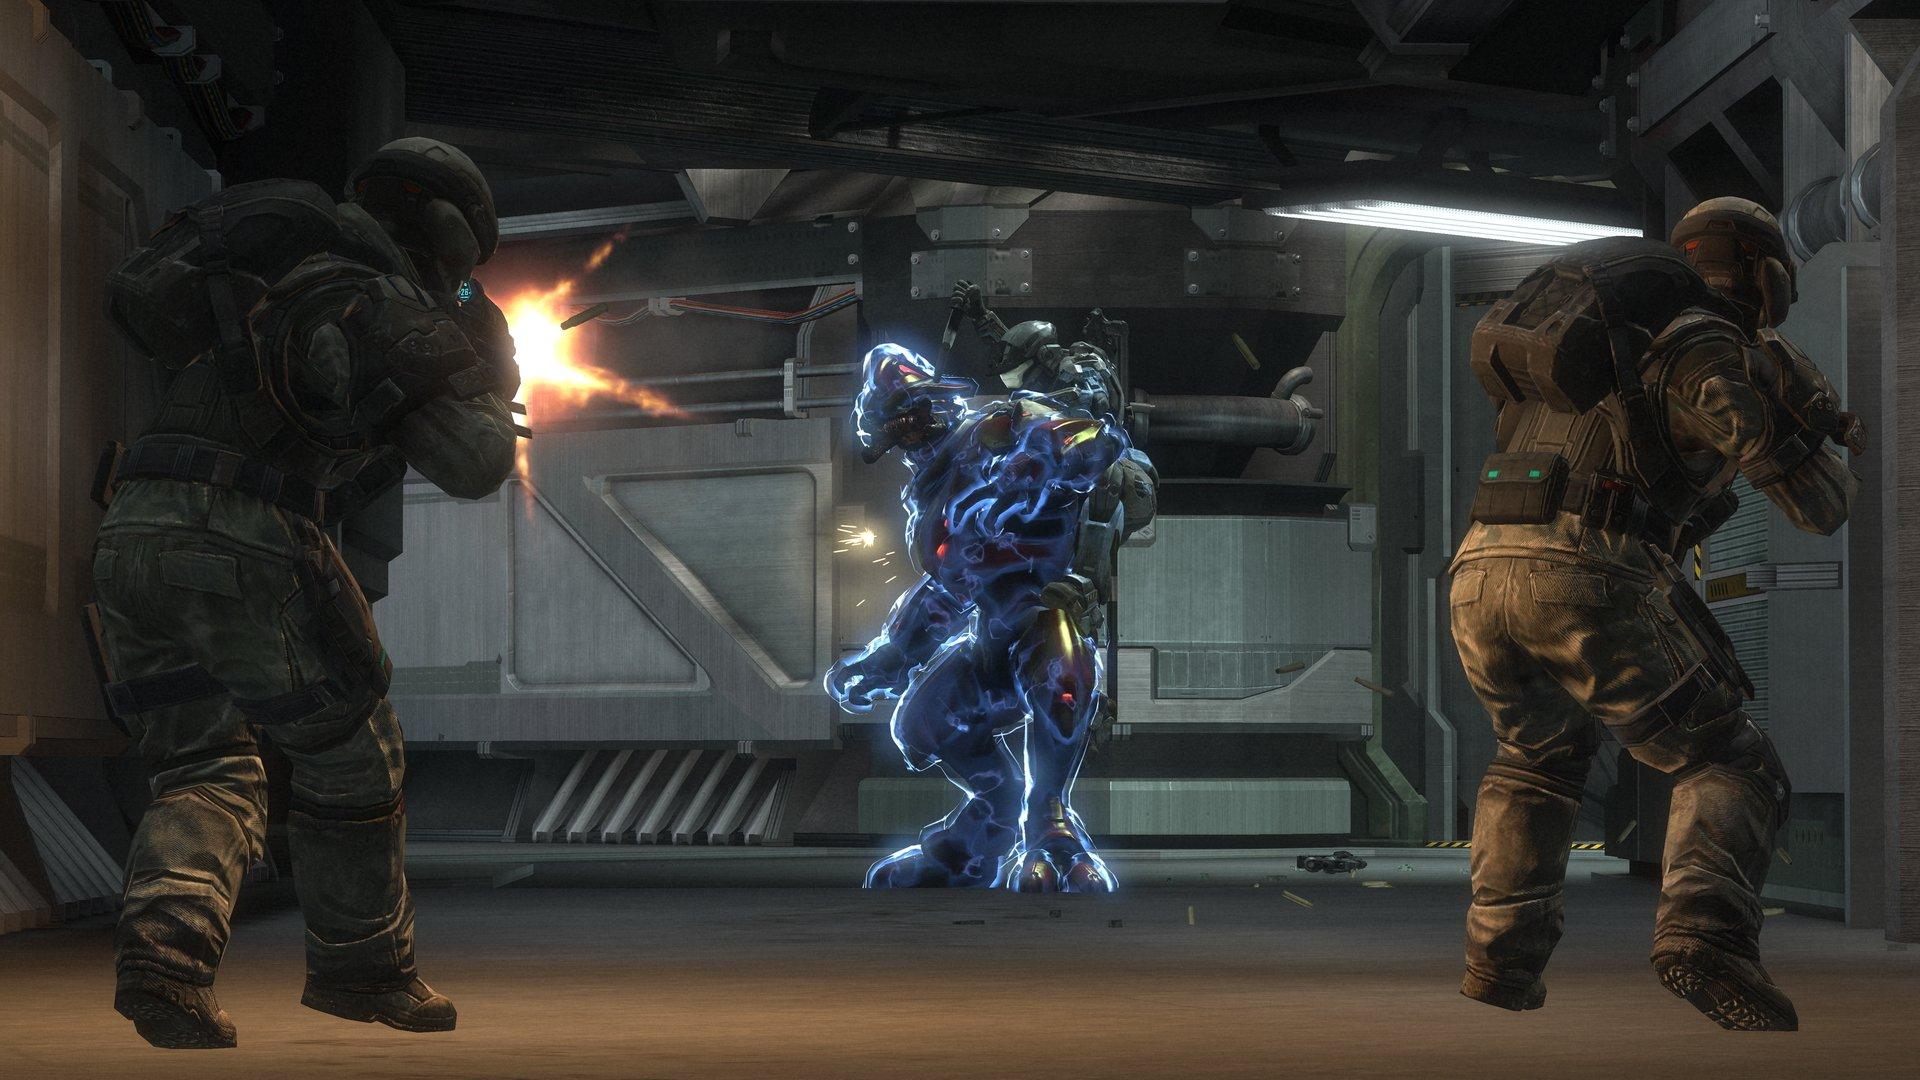 Halo Reach - Xbox 360 Game